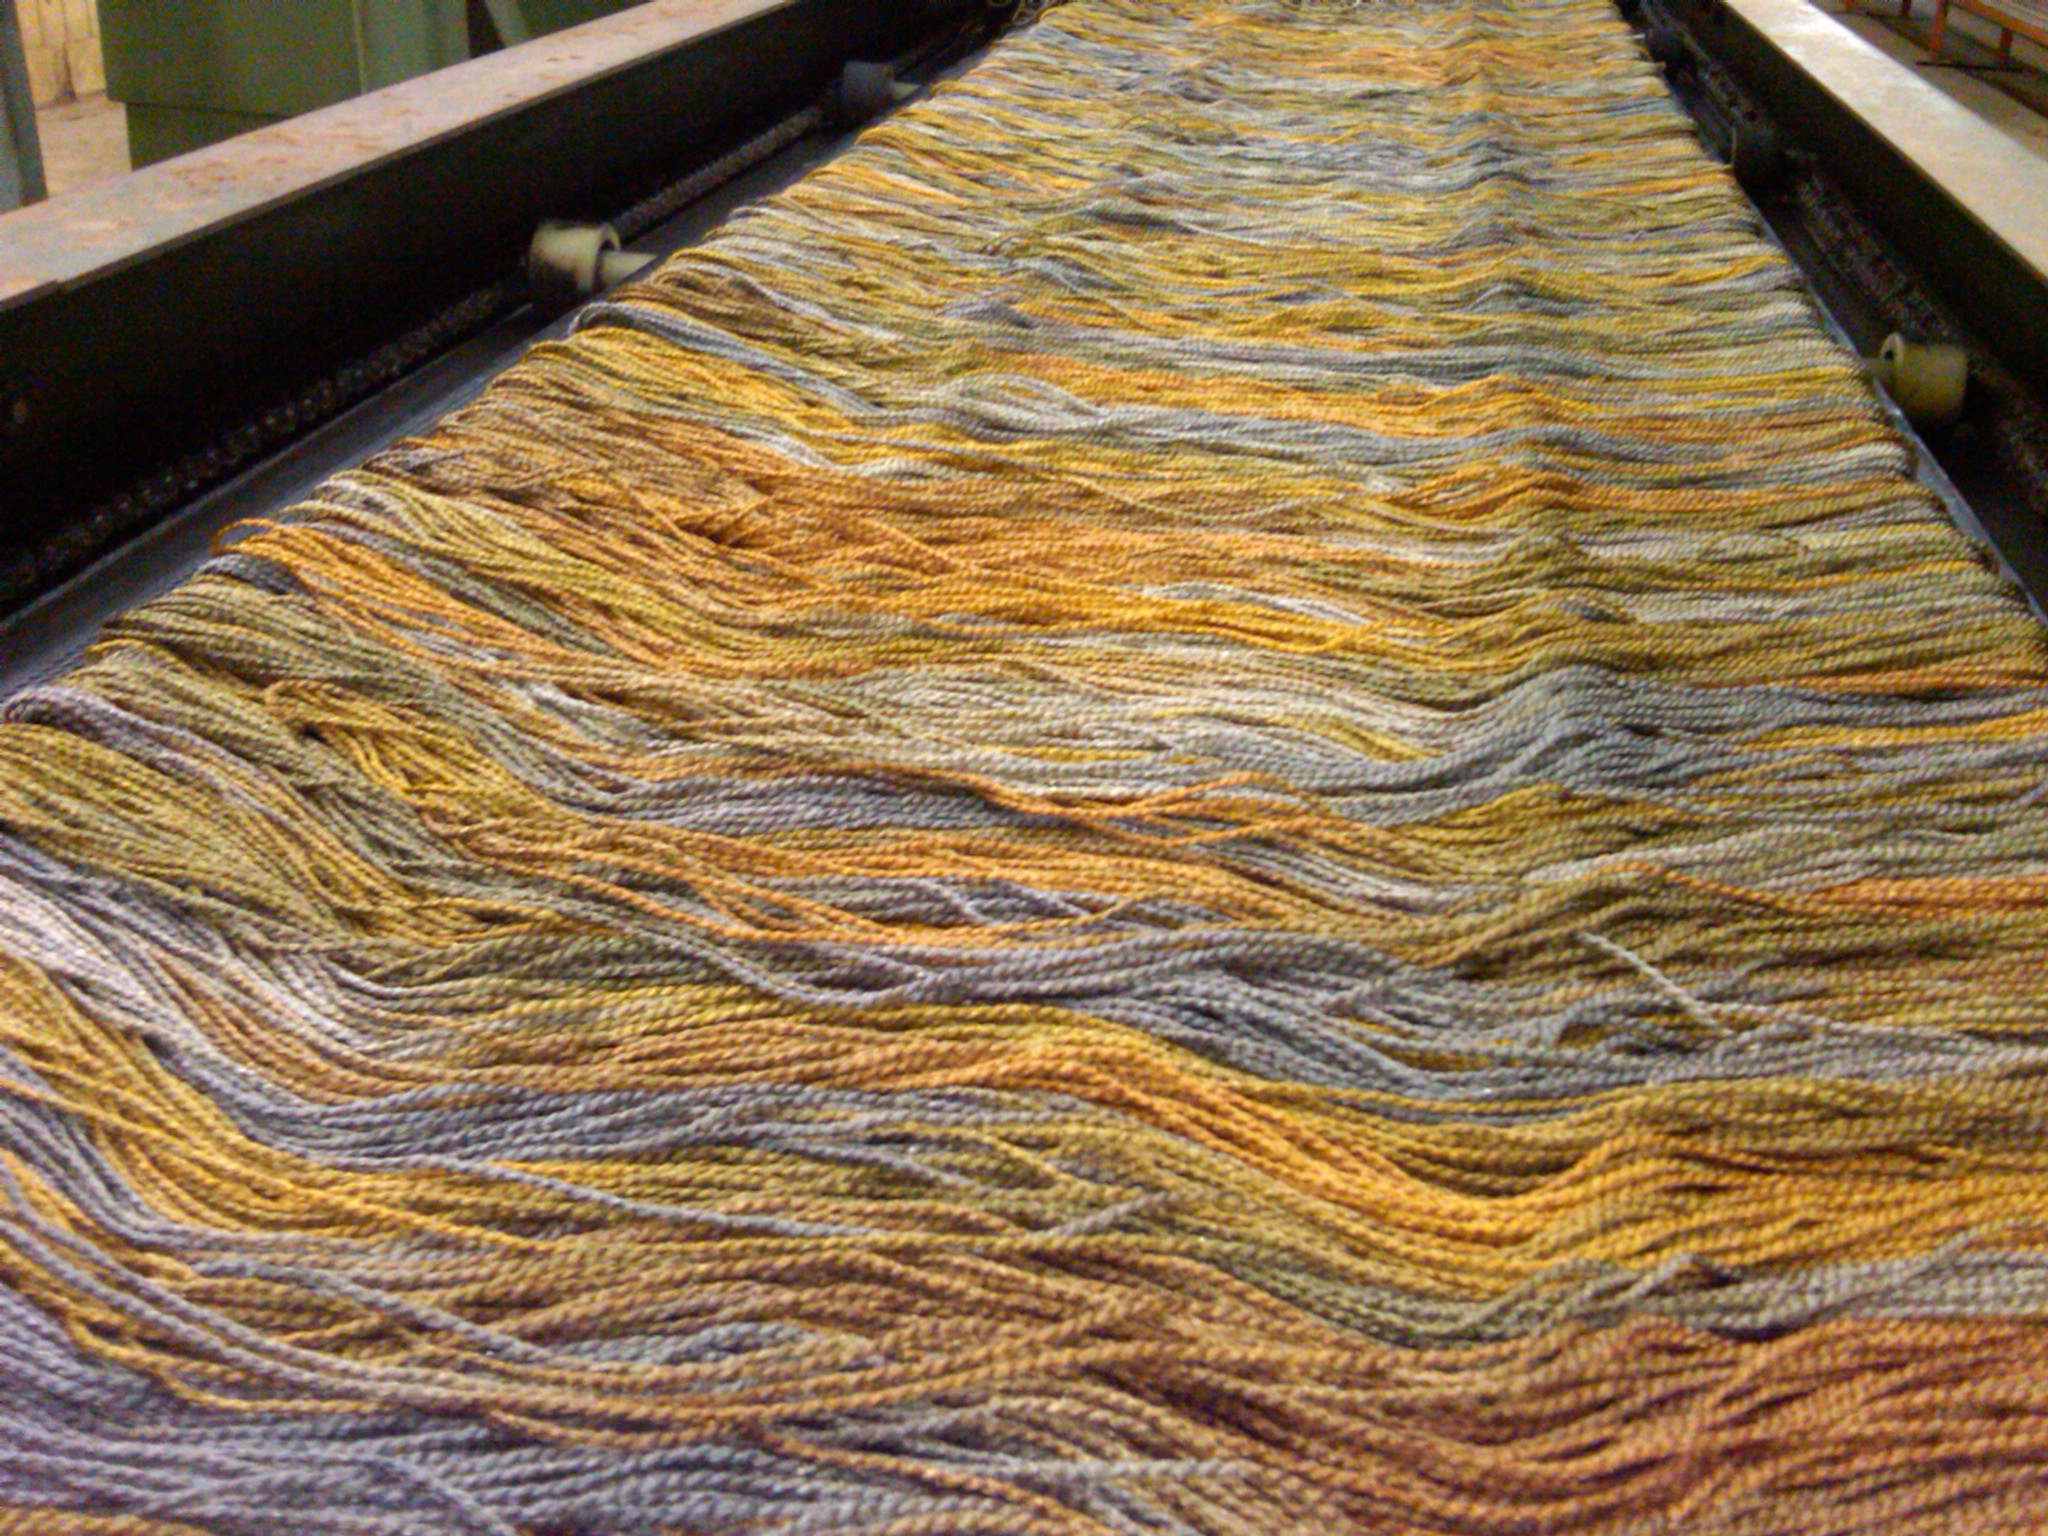 Space dyed yarn from Pharr Yarns